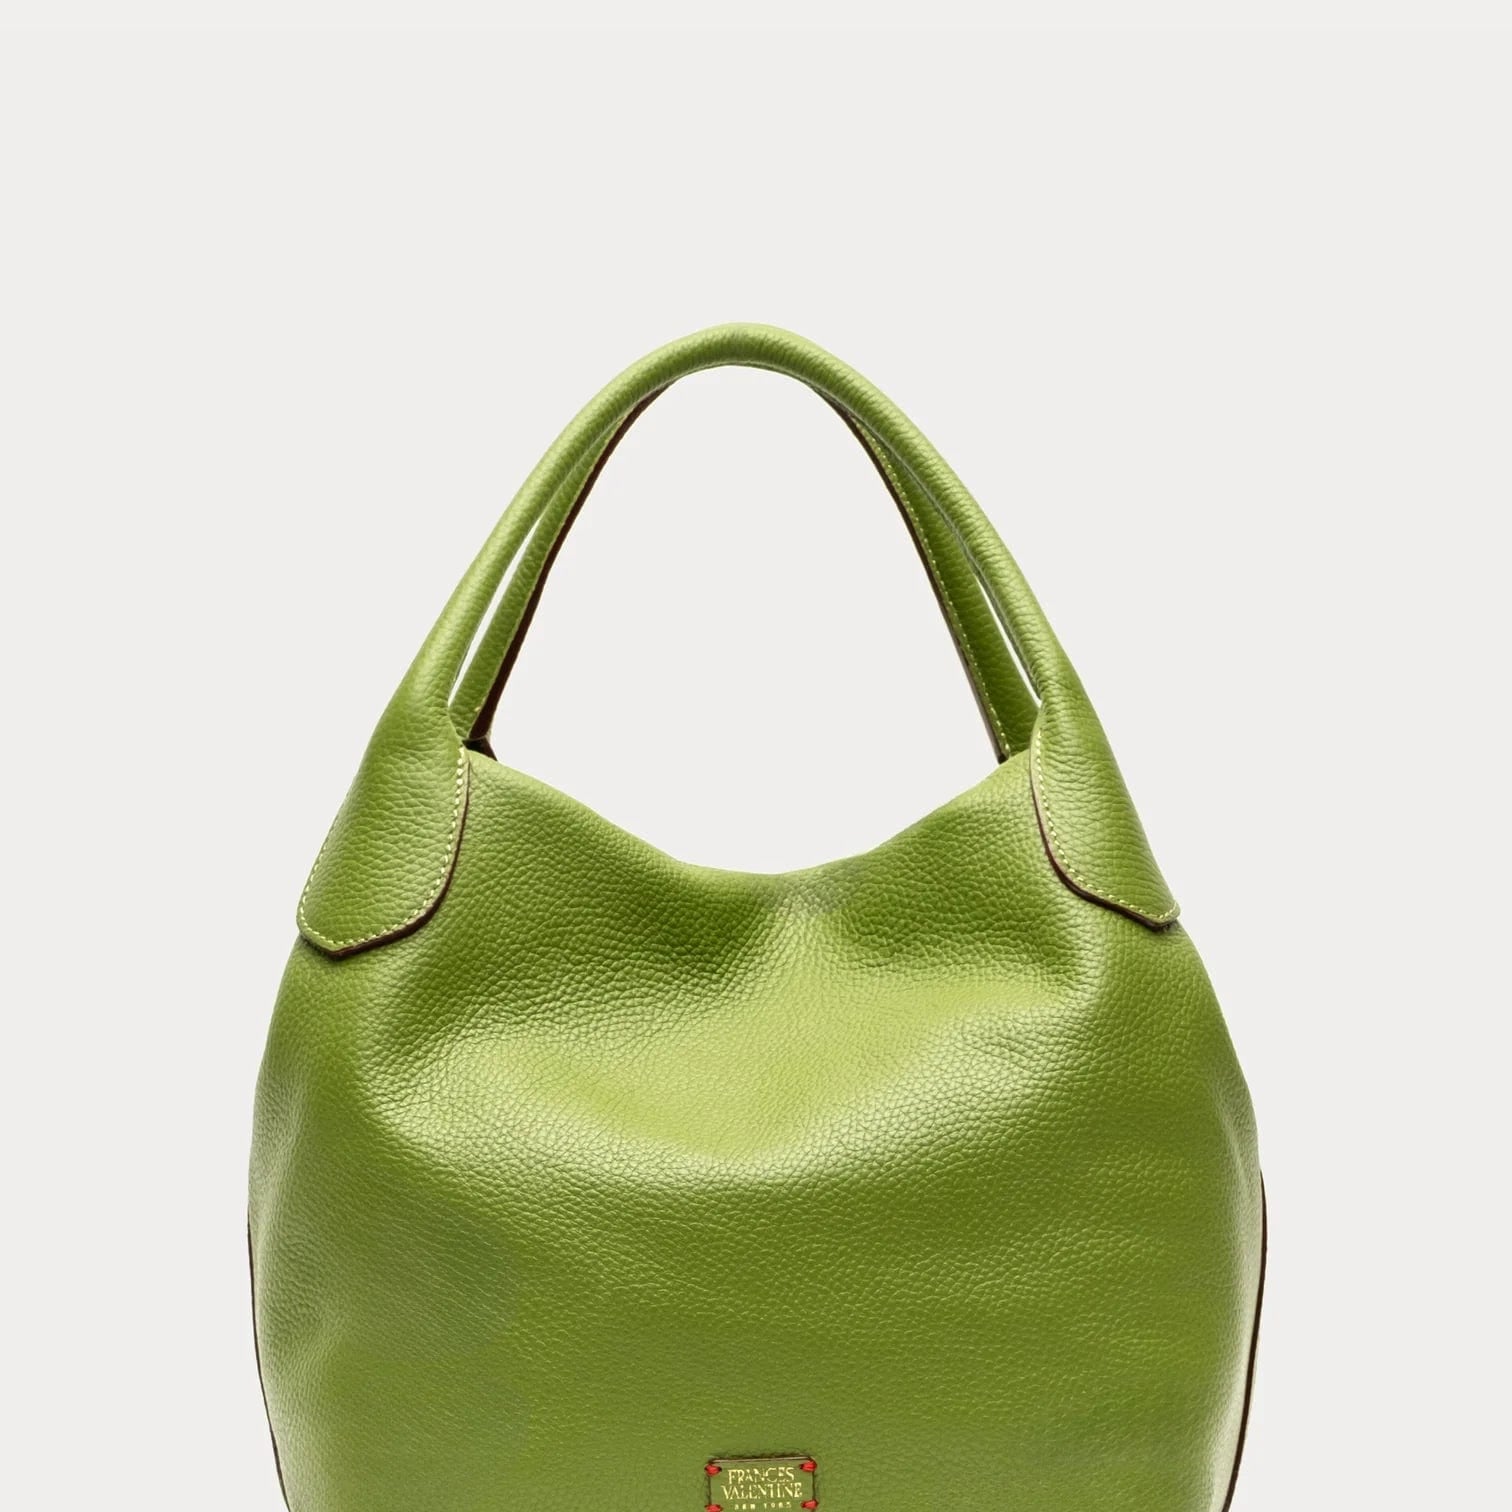 Frances Valentine Handbags Tumbled Green Frances Valentine Sweet Pea Tote